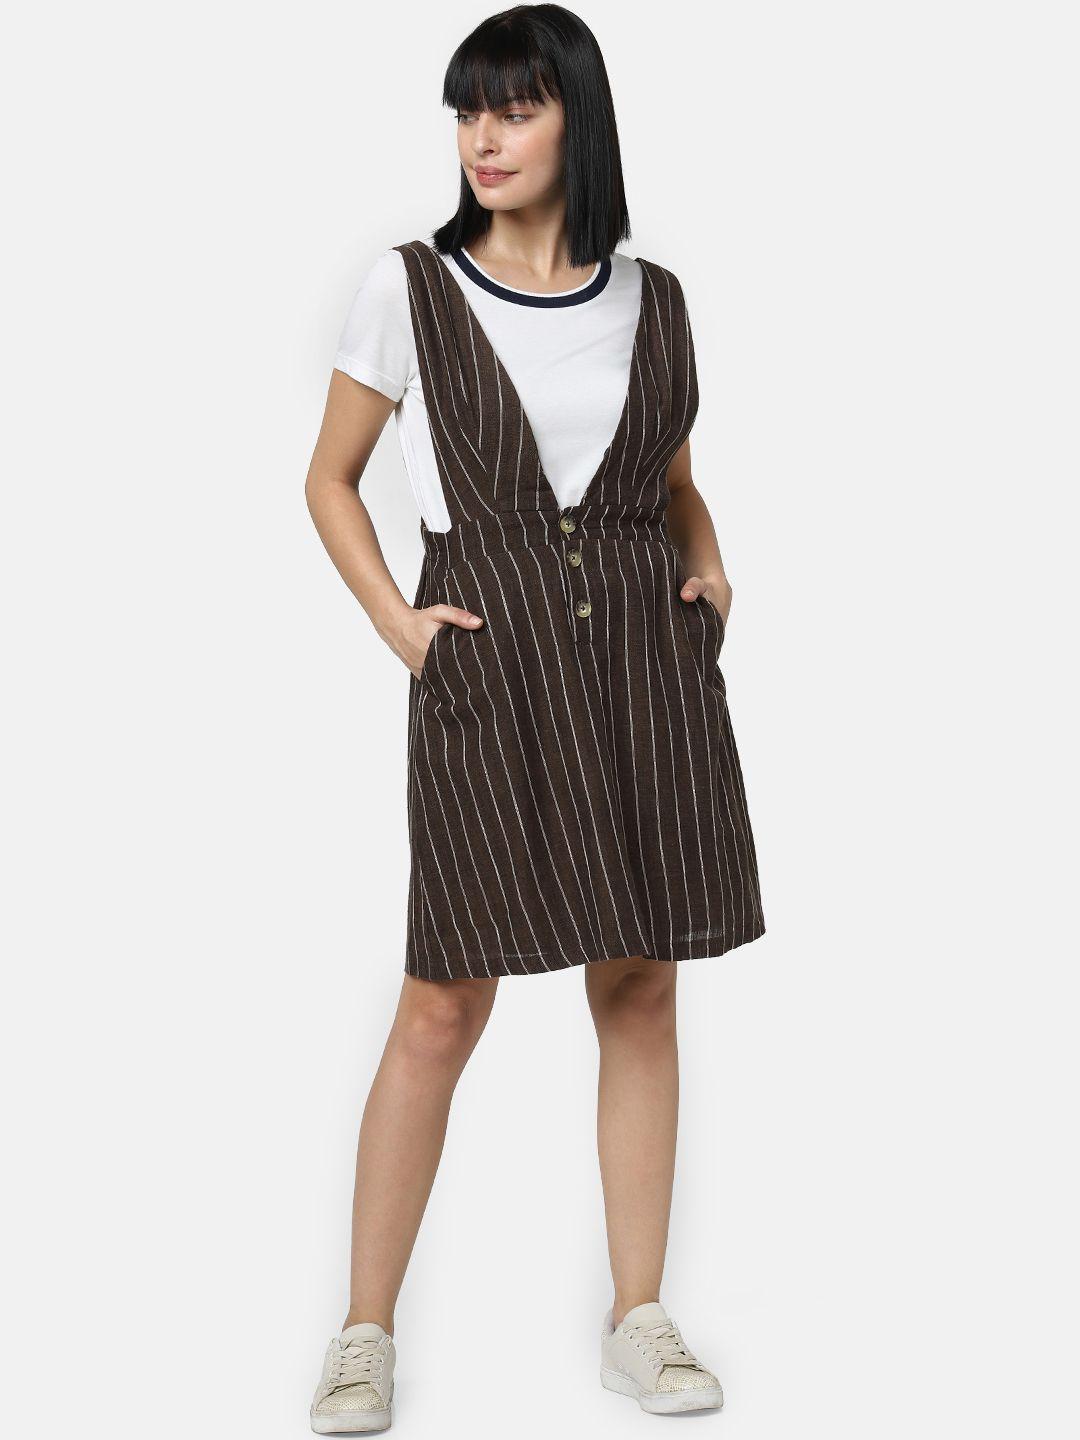 vero moda women coffee brown & white striped pinafore dress